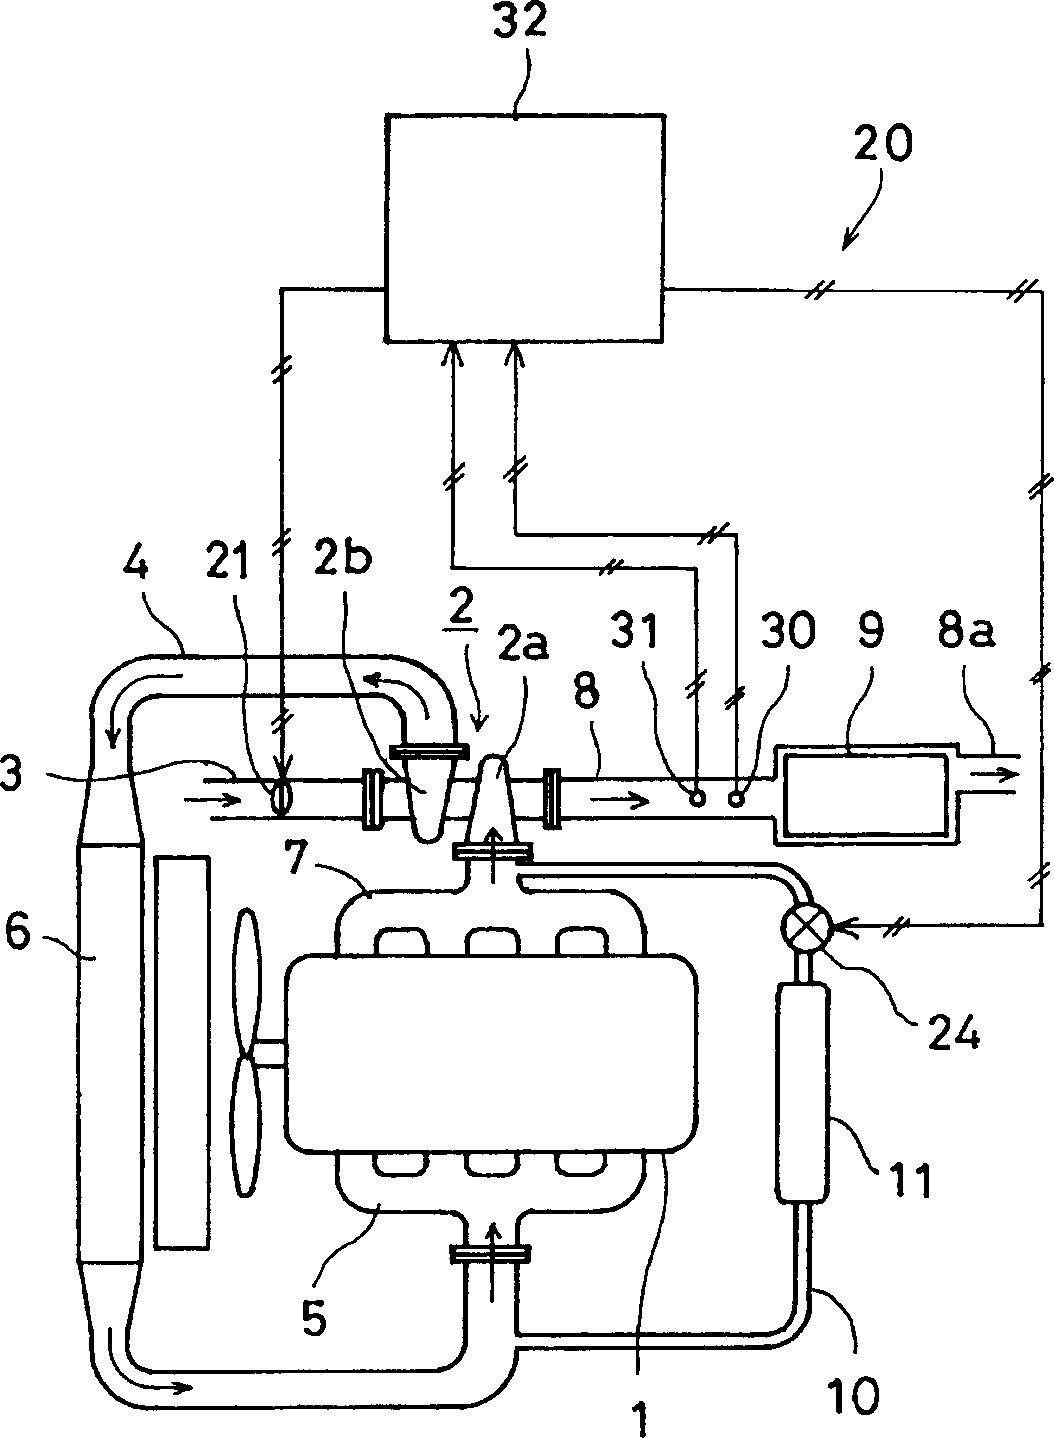 Exhaust denitrification device of engine